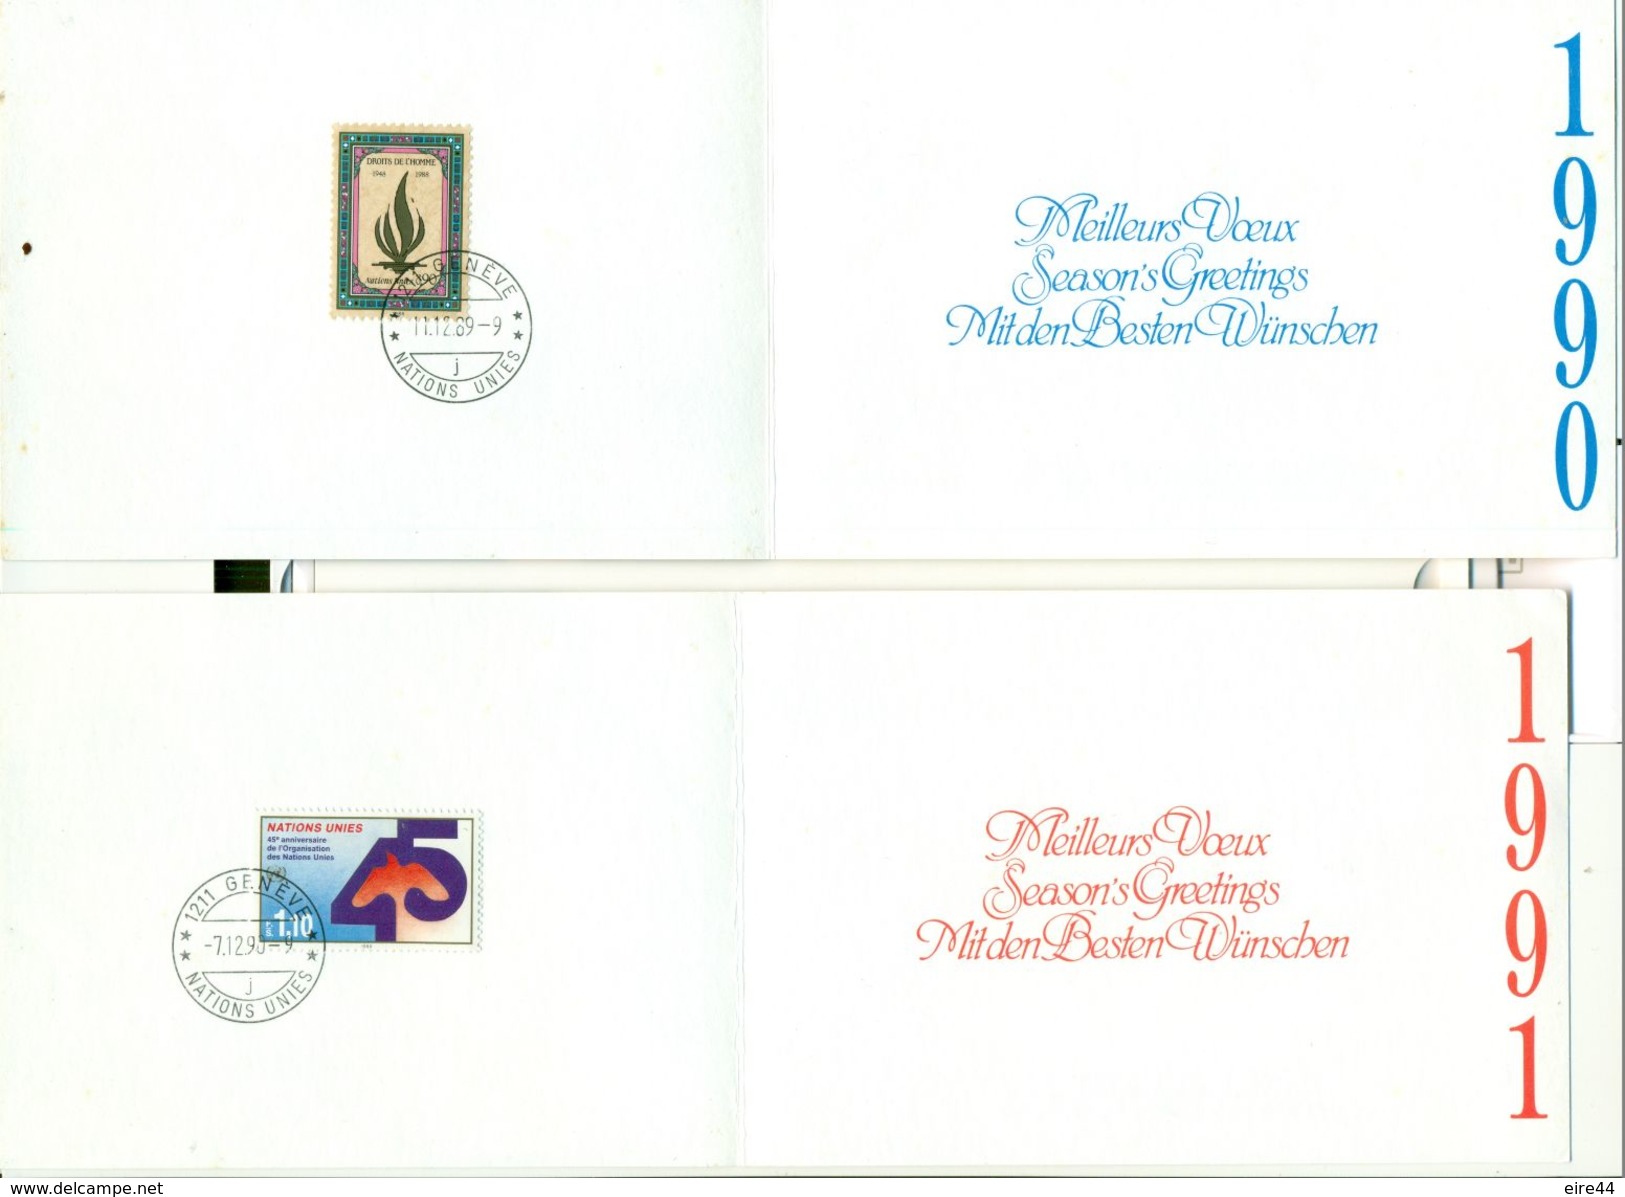 United Nations ONU 7 Postcards Season's Greetings  Mit Den Besten Wünschen - Collezioni & Lotti